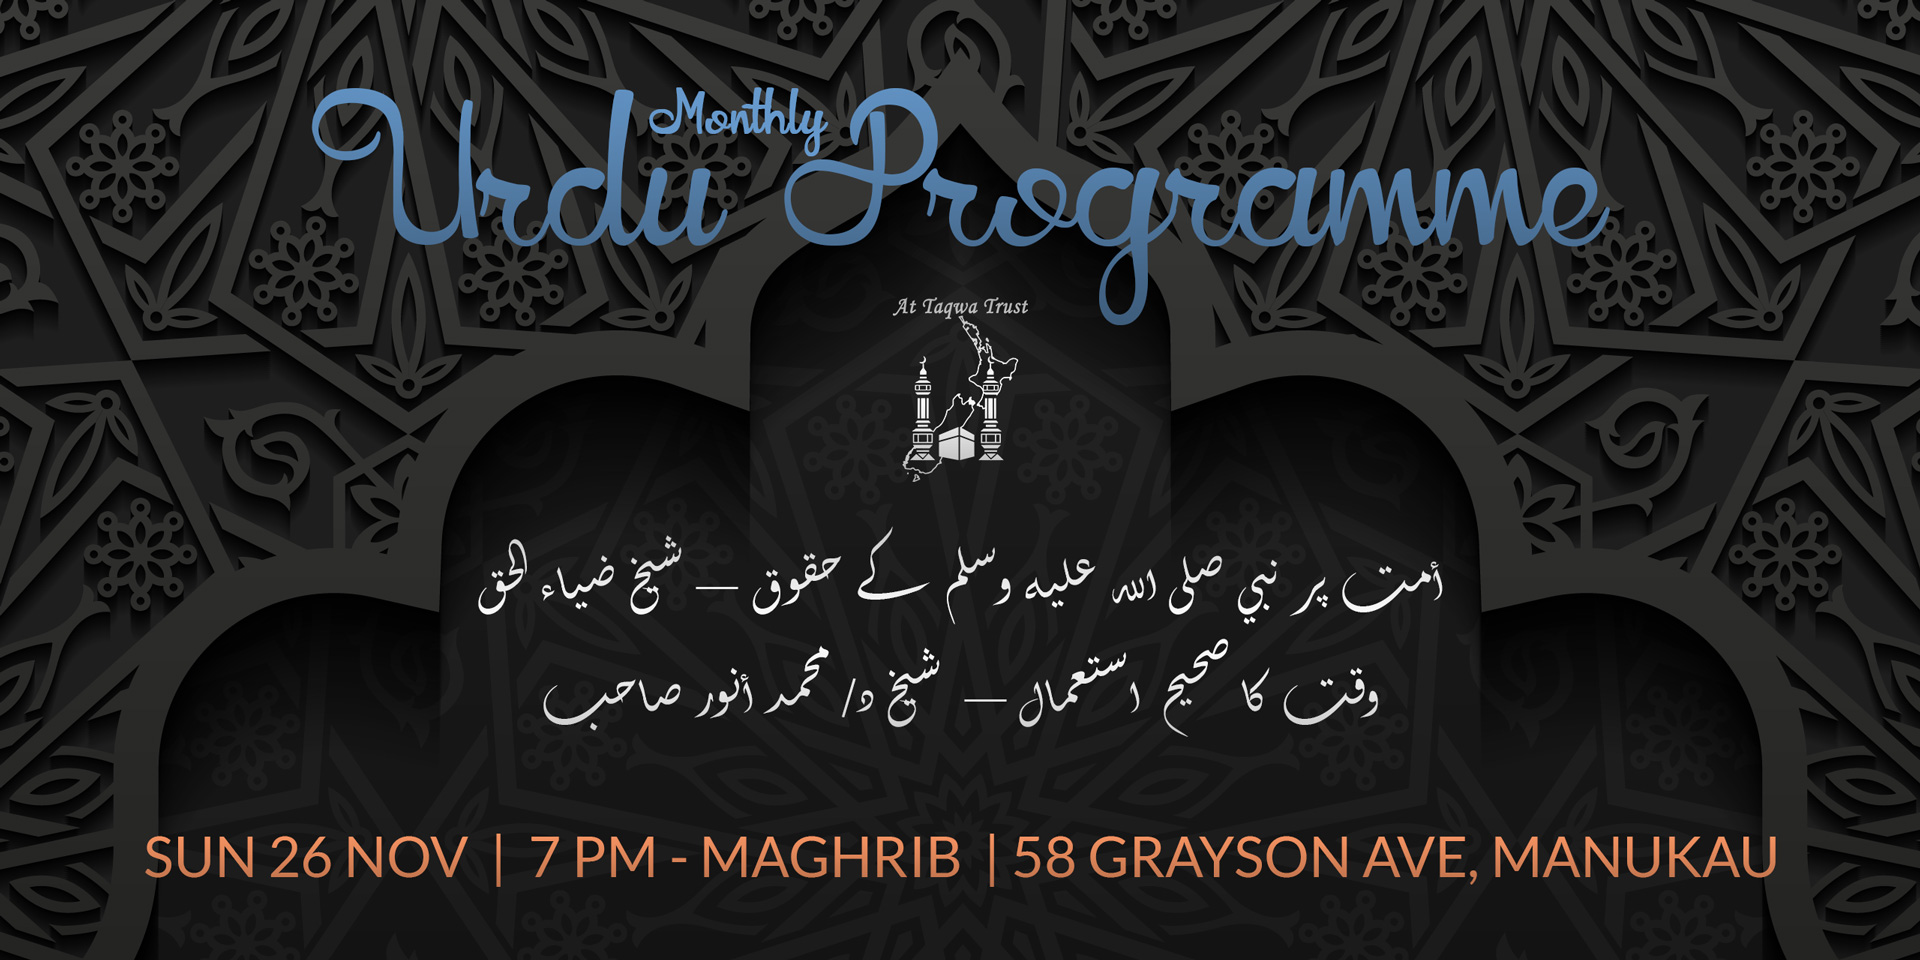 November Urdu Programme